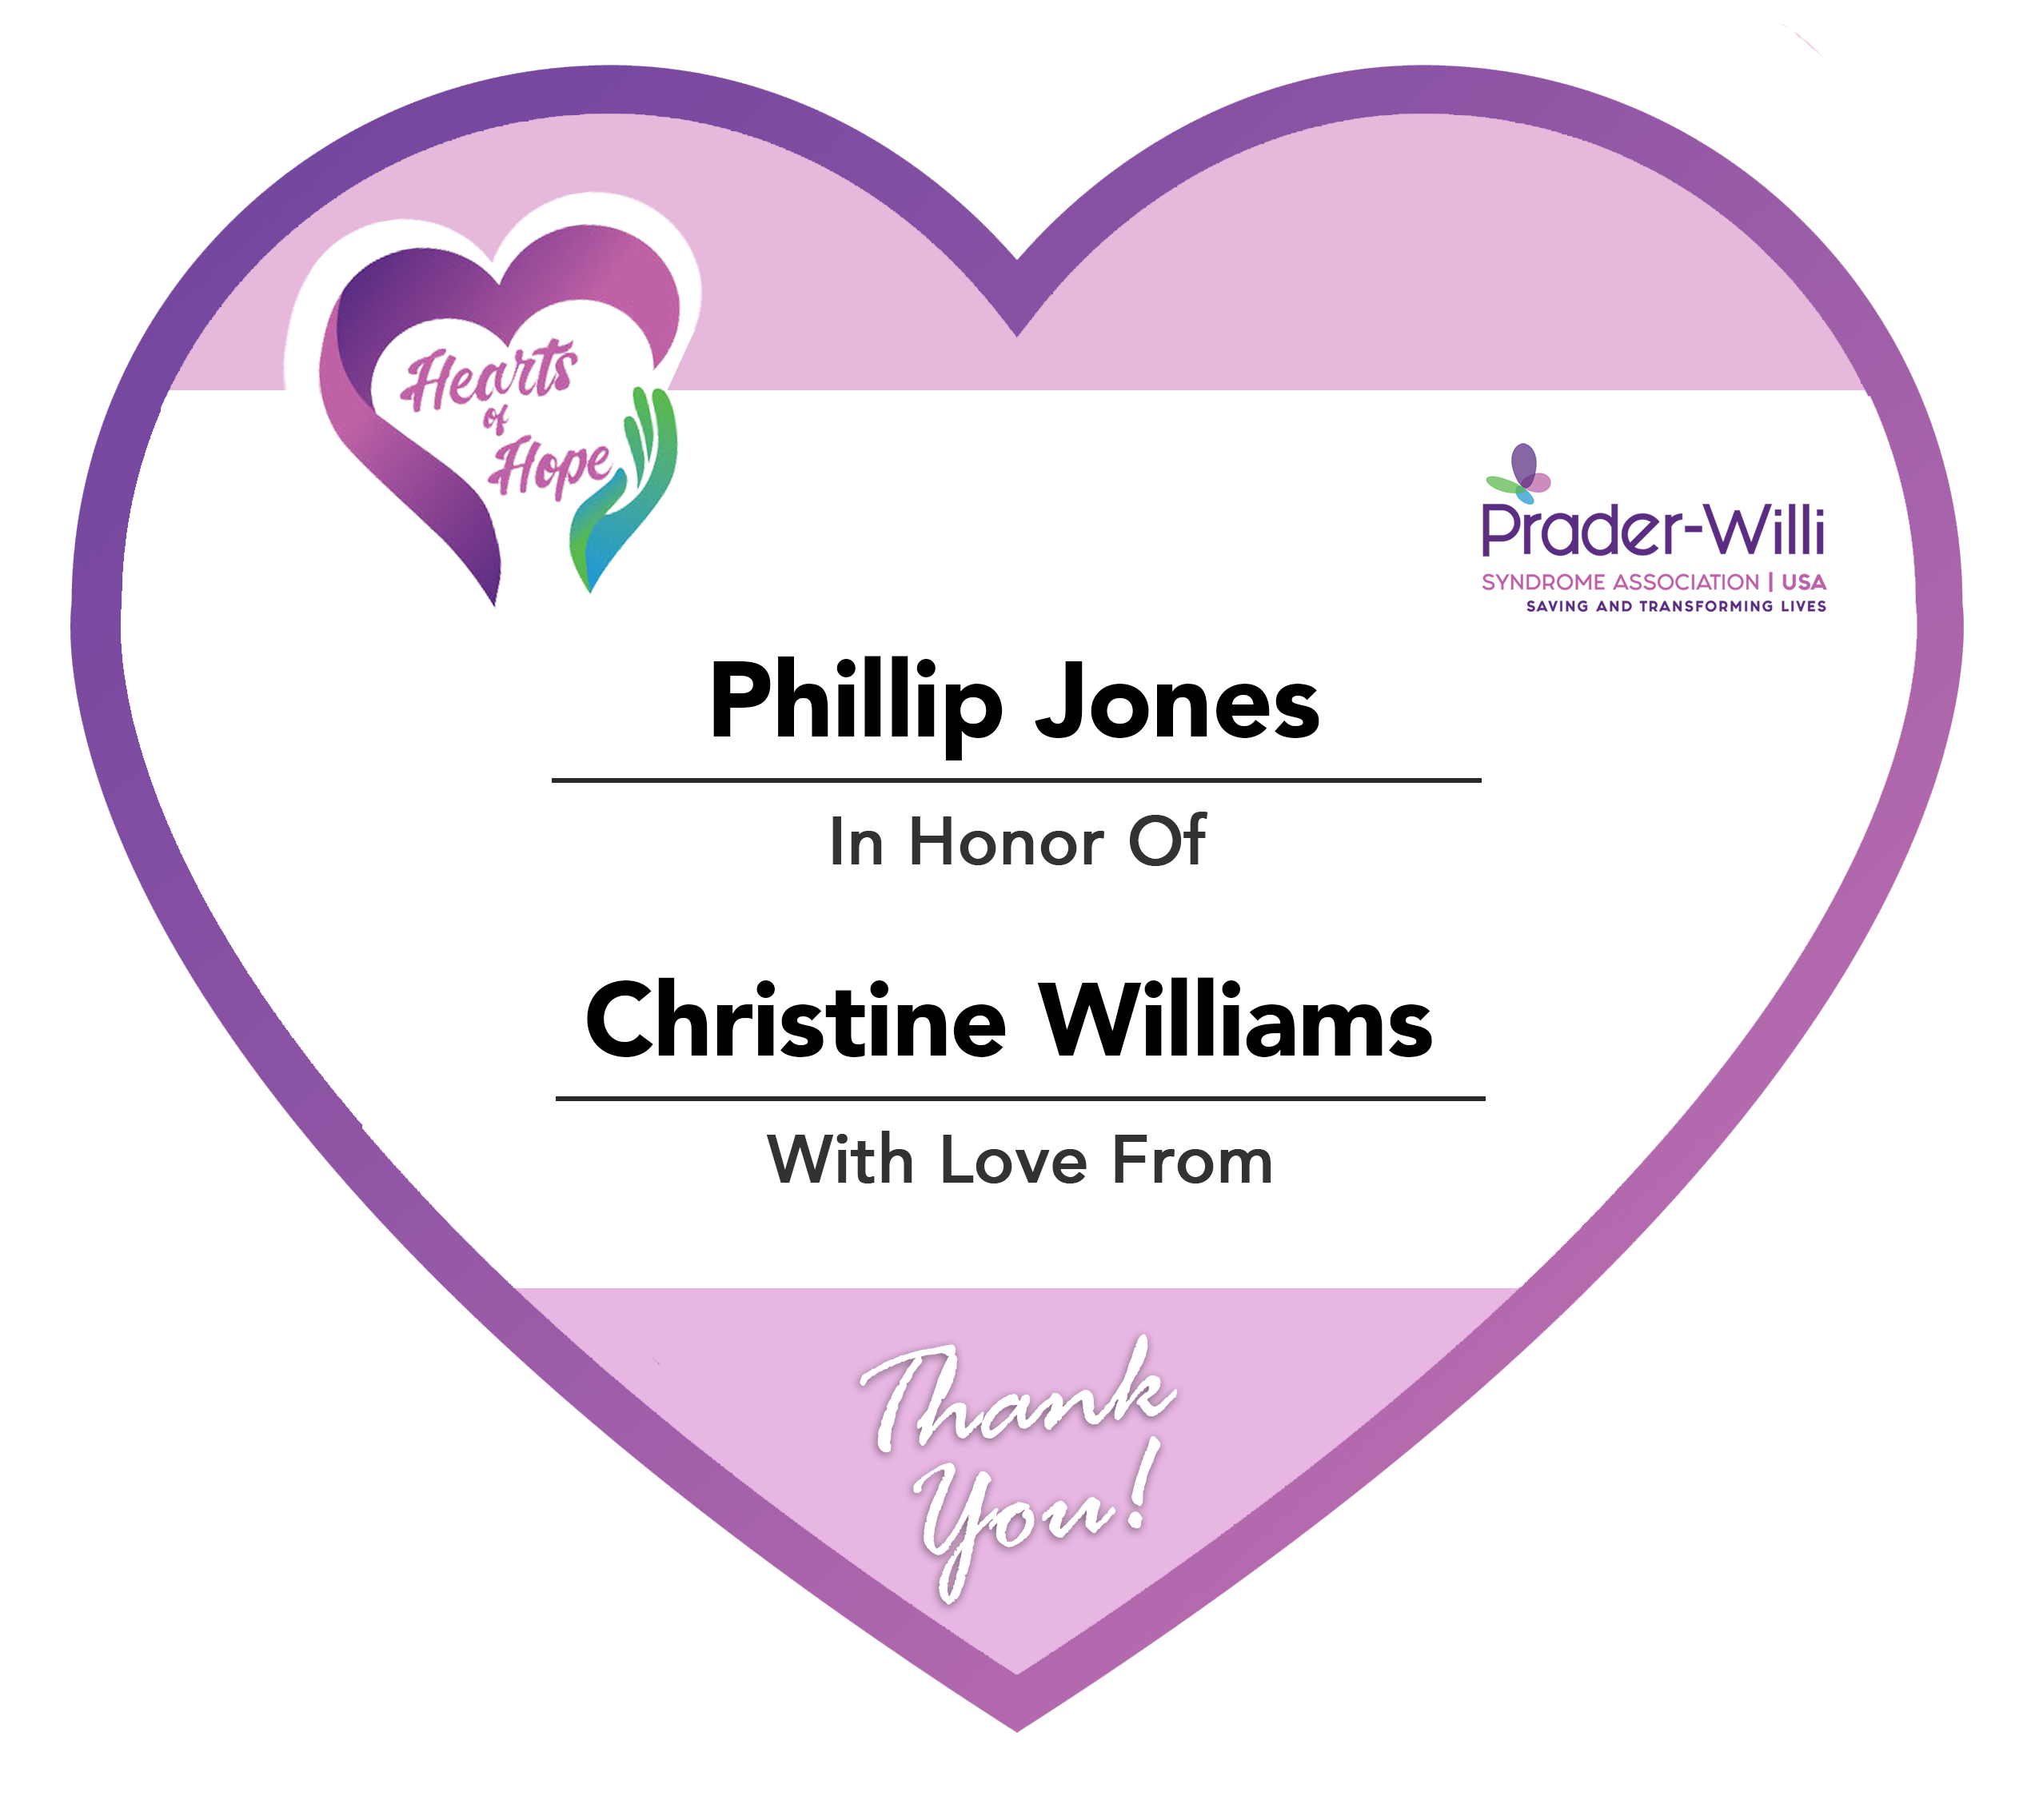 PWSA Paperheart PhillipJones, Prader-Willi Syndrome Association | USA